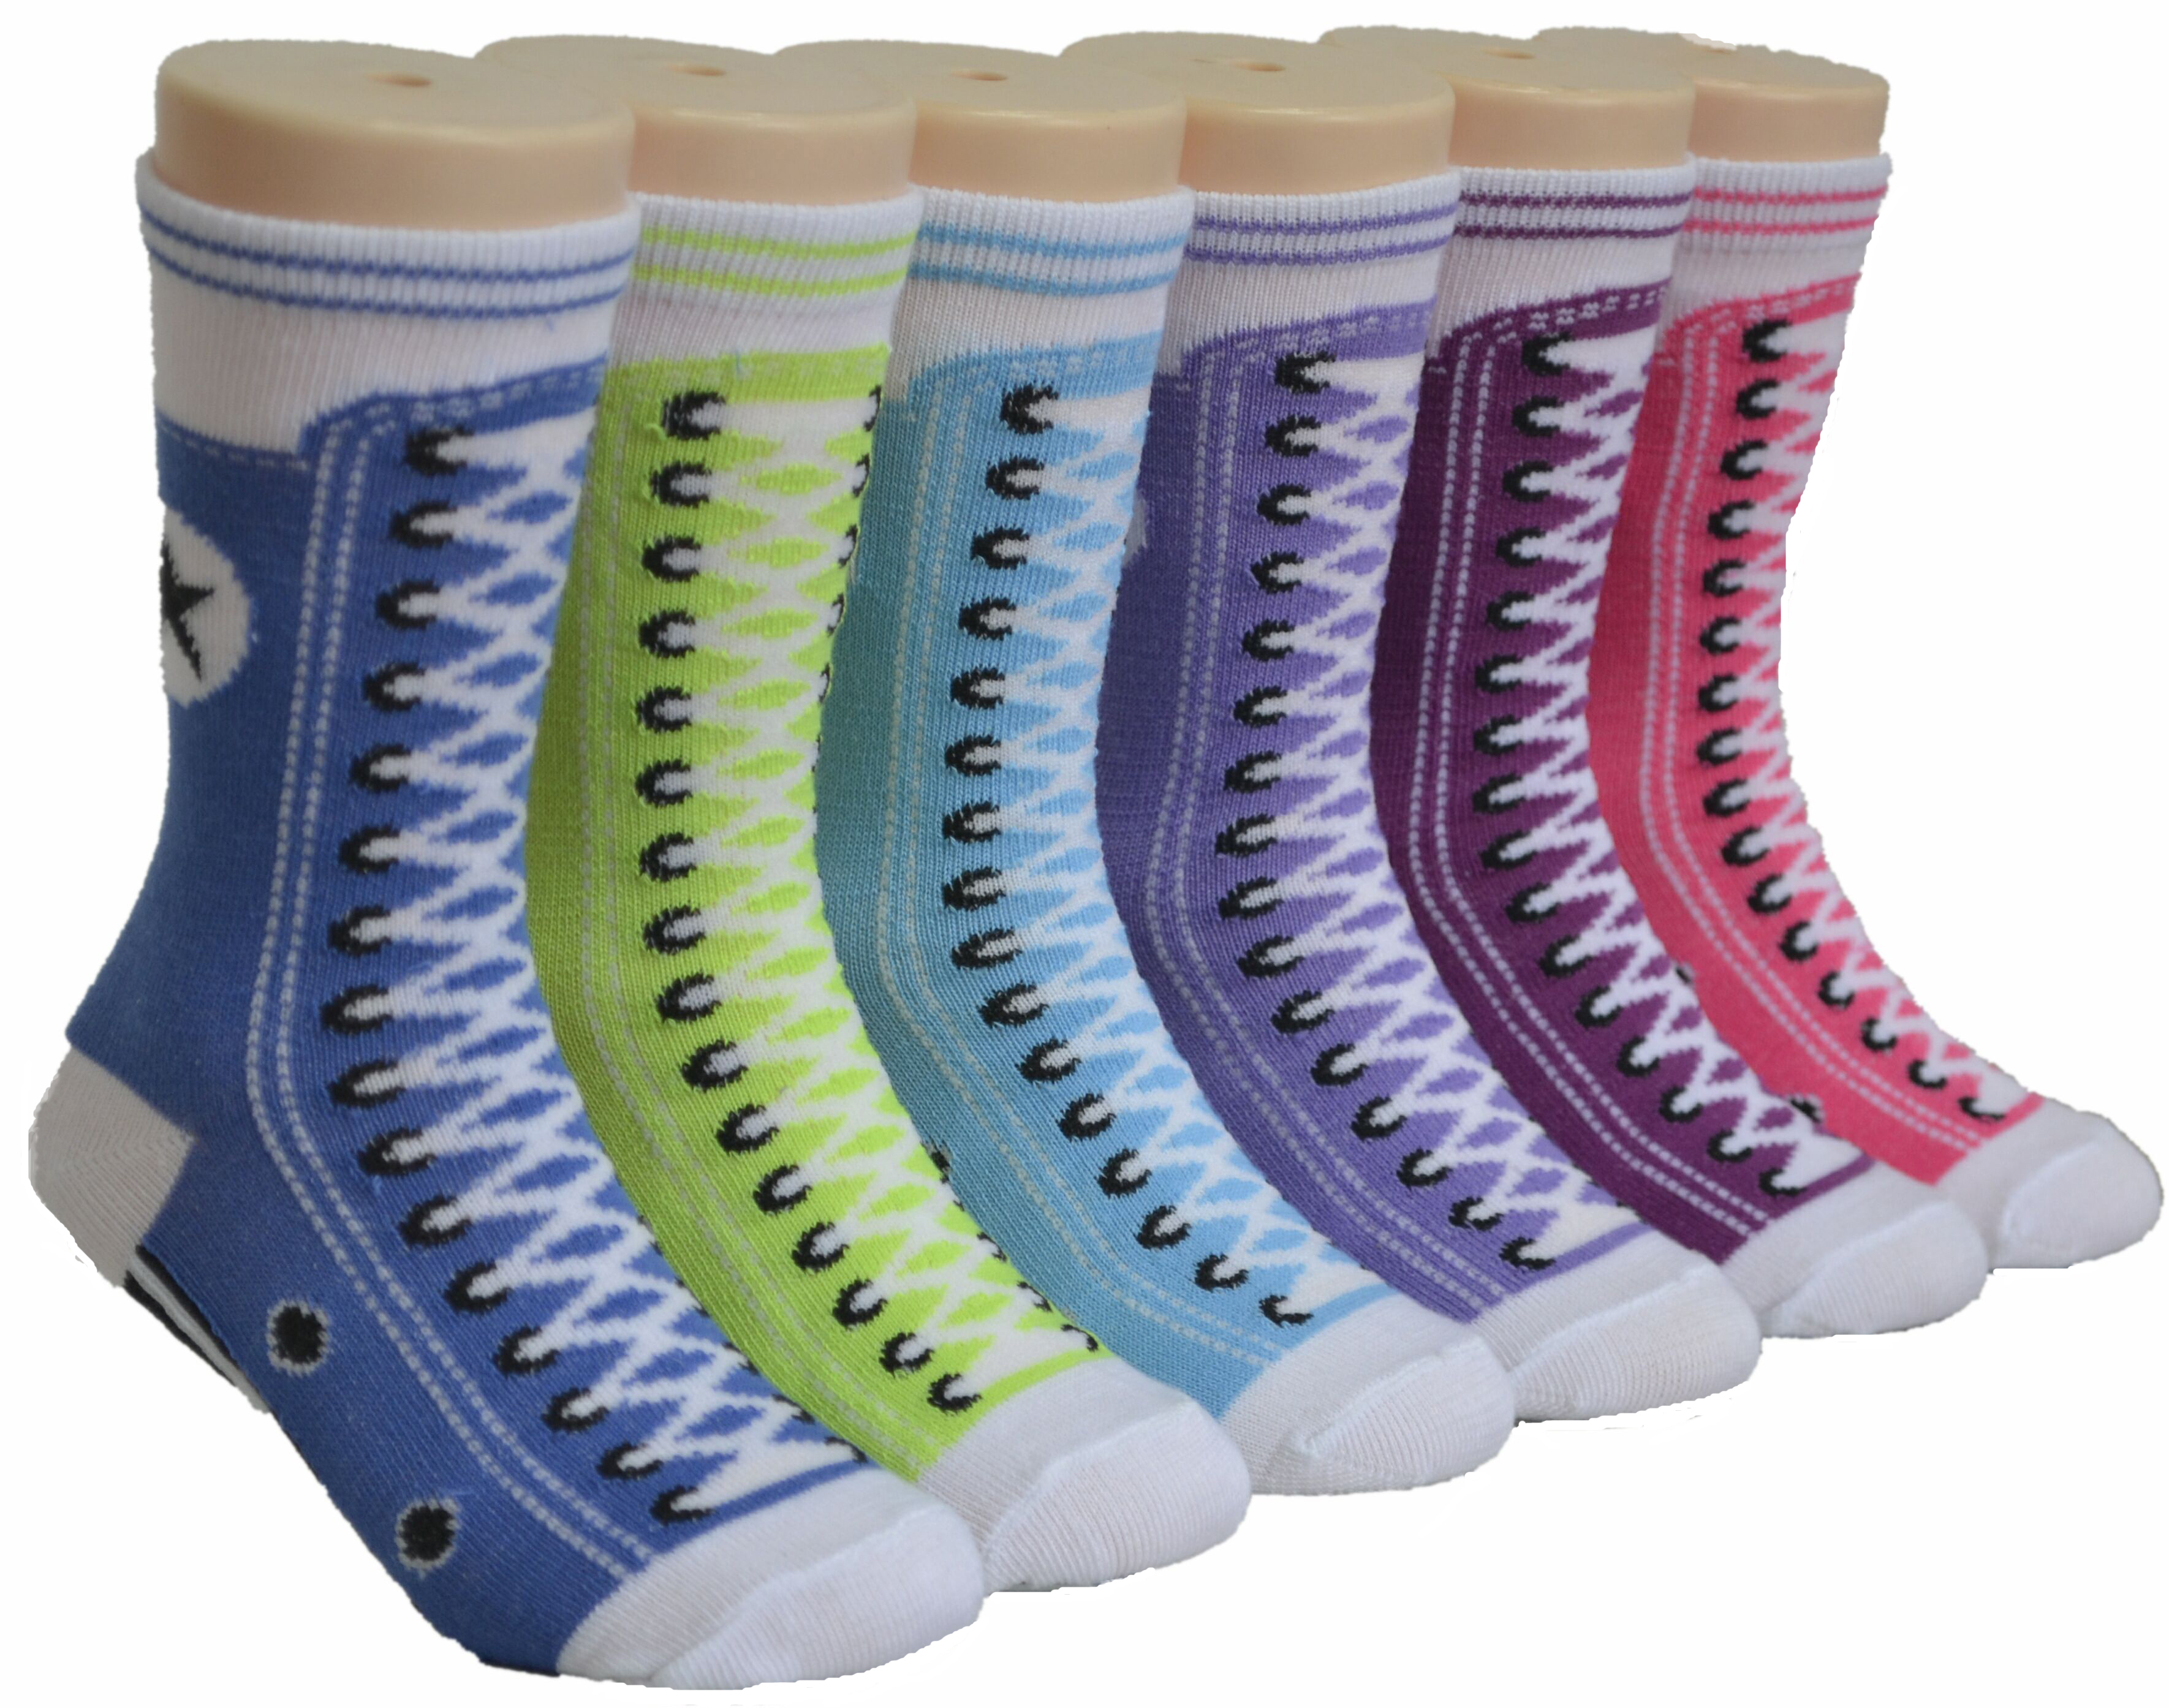 Boy's & Girl's Novelty Crew Socks - Colorful Sneaker Print - Size 6-8